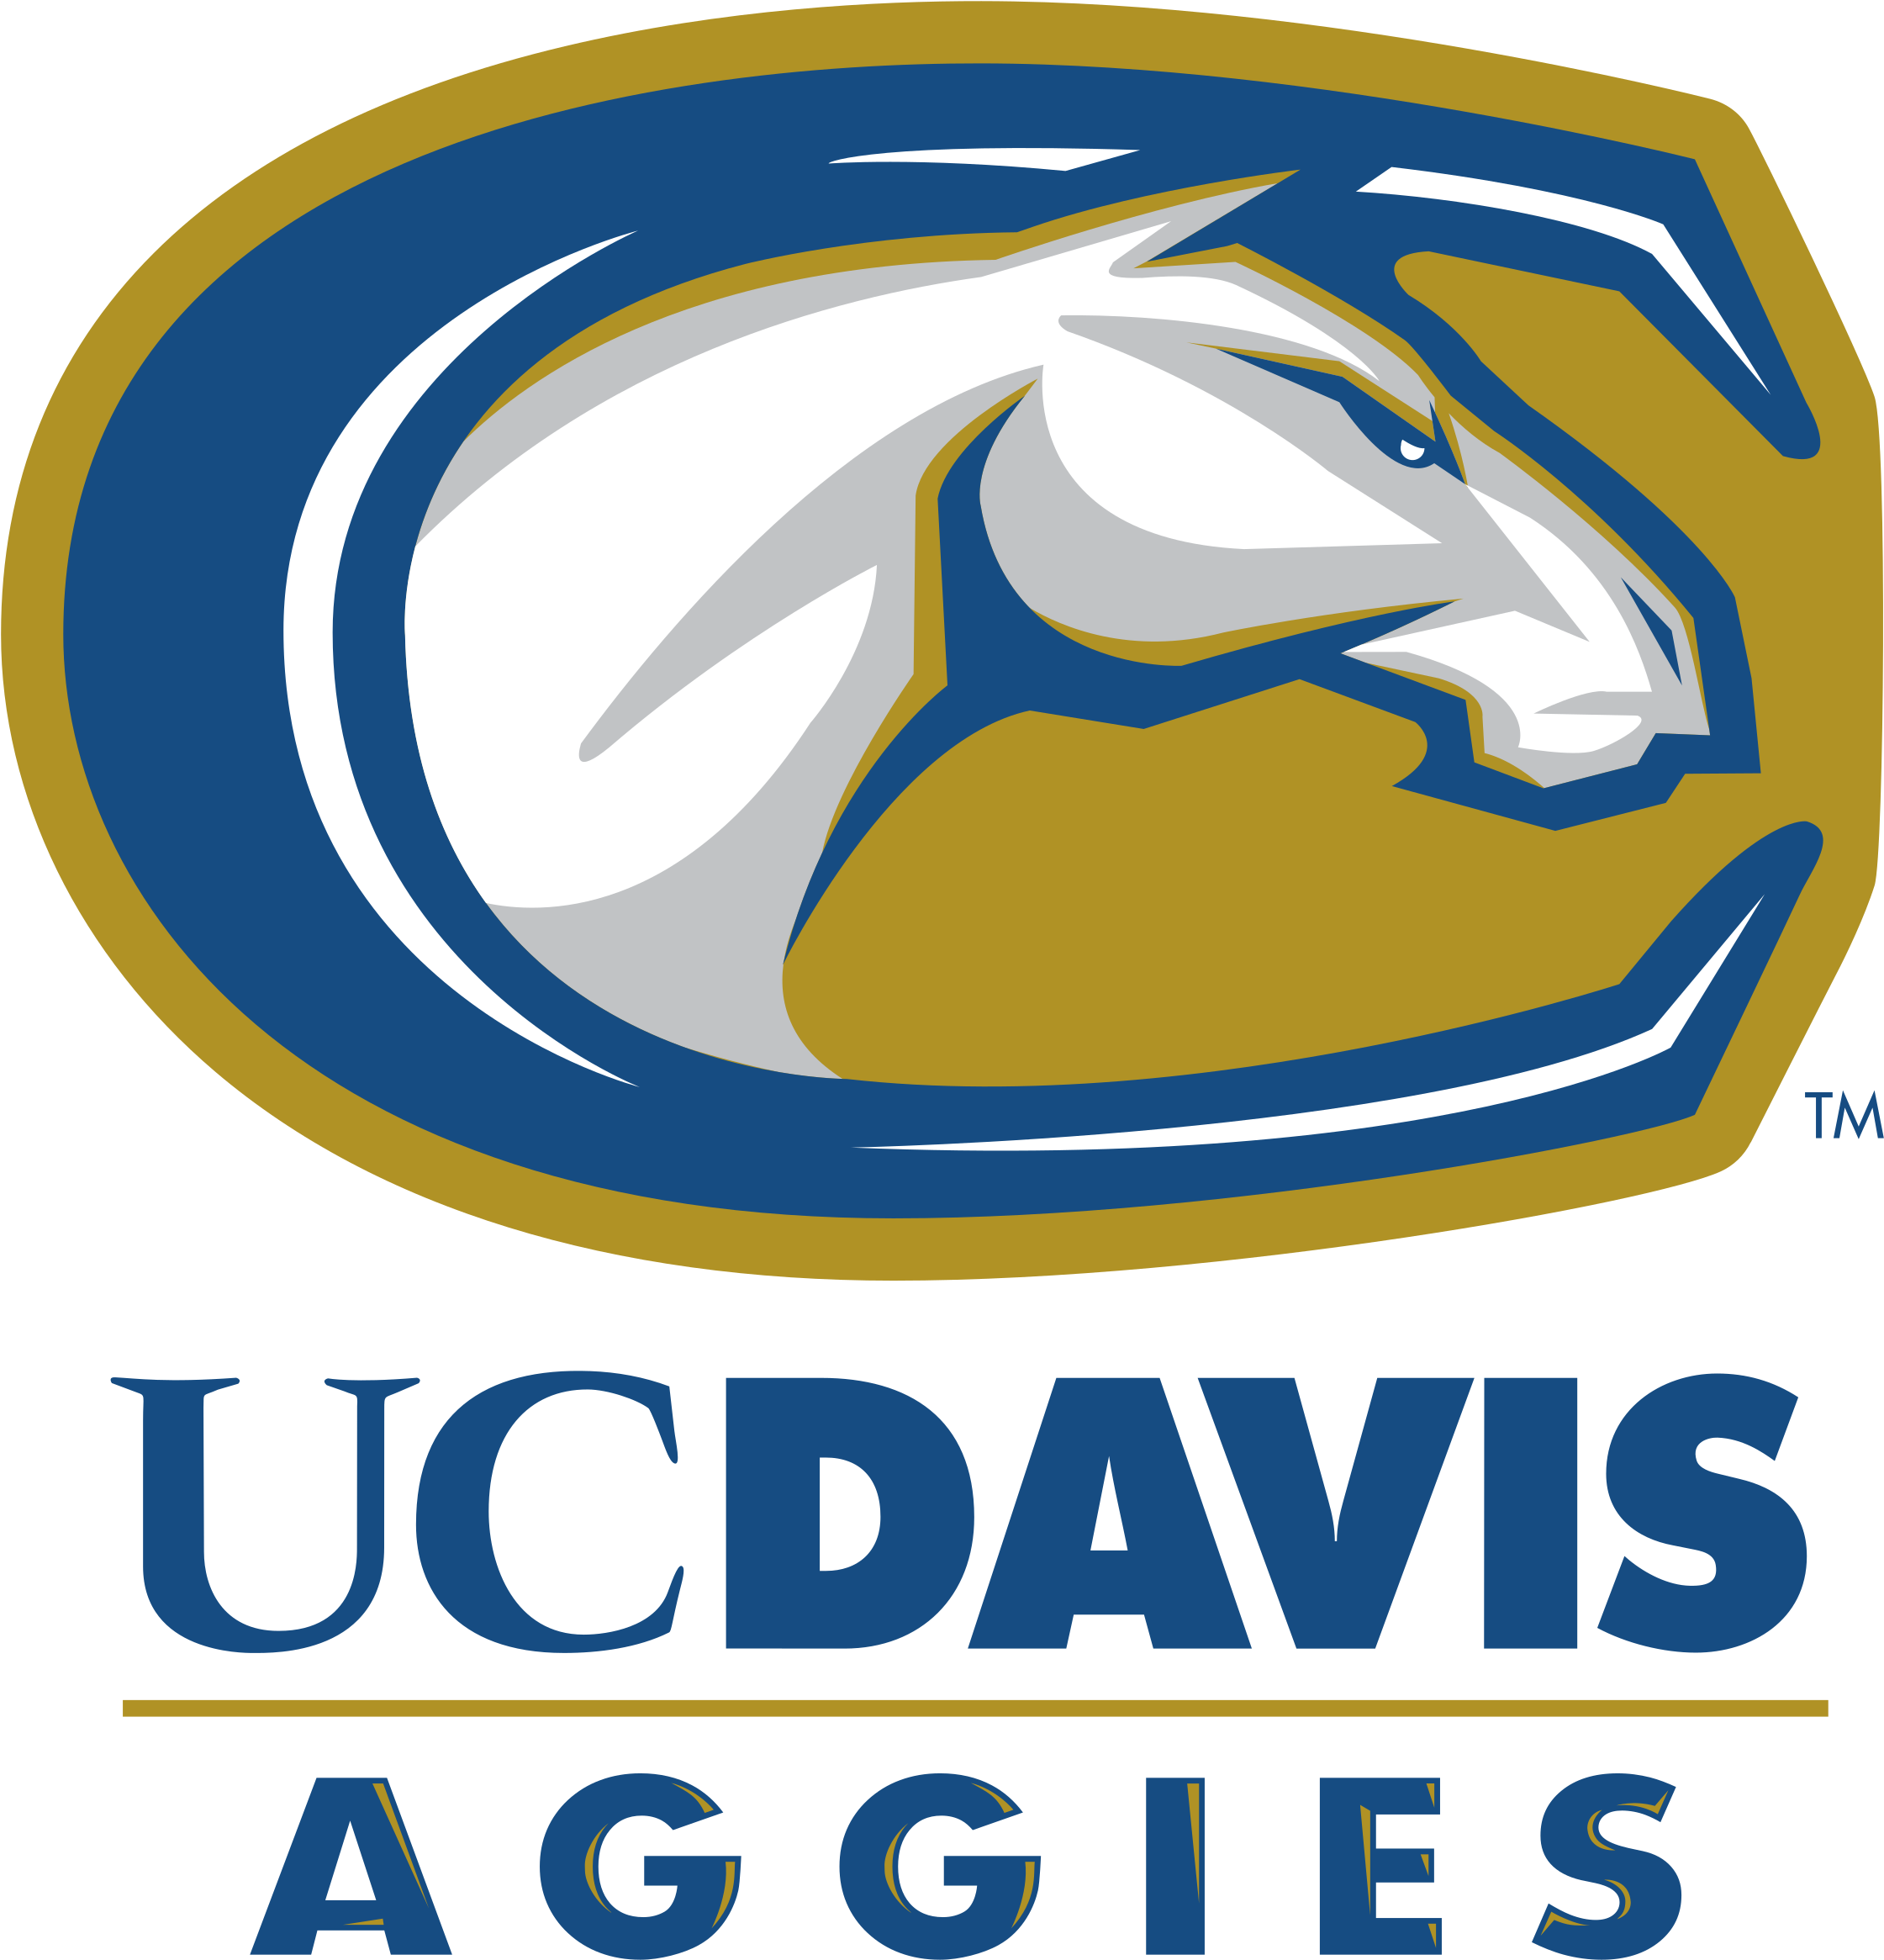 Uc Davis Aggies Logo Black And White - University Of California Davis Mascot (2400x2400)